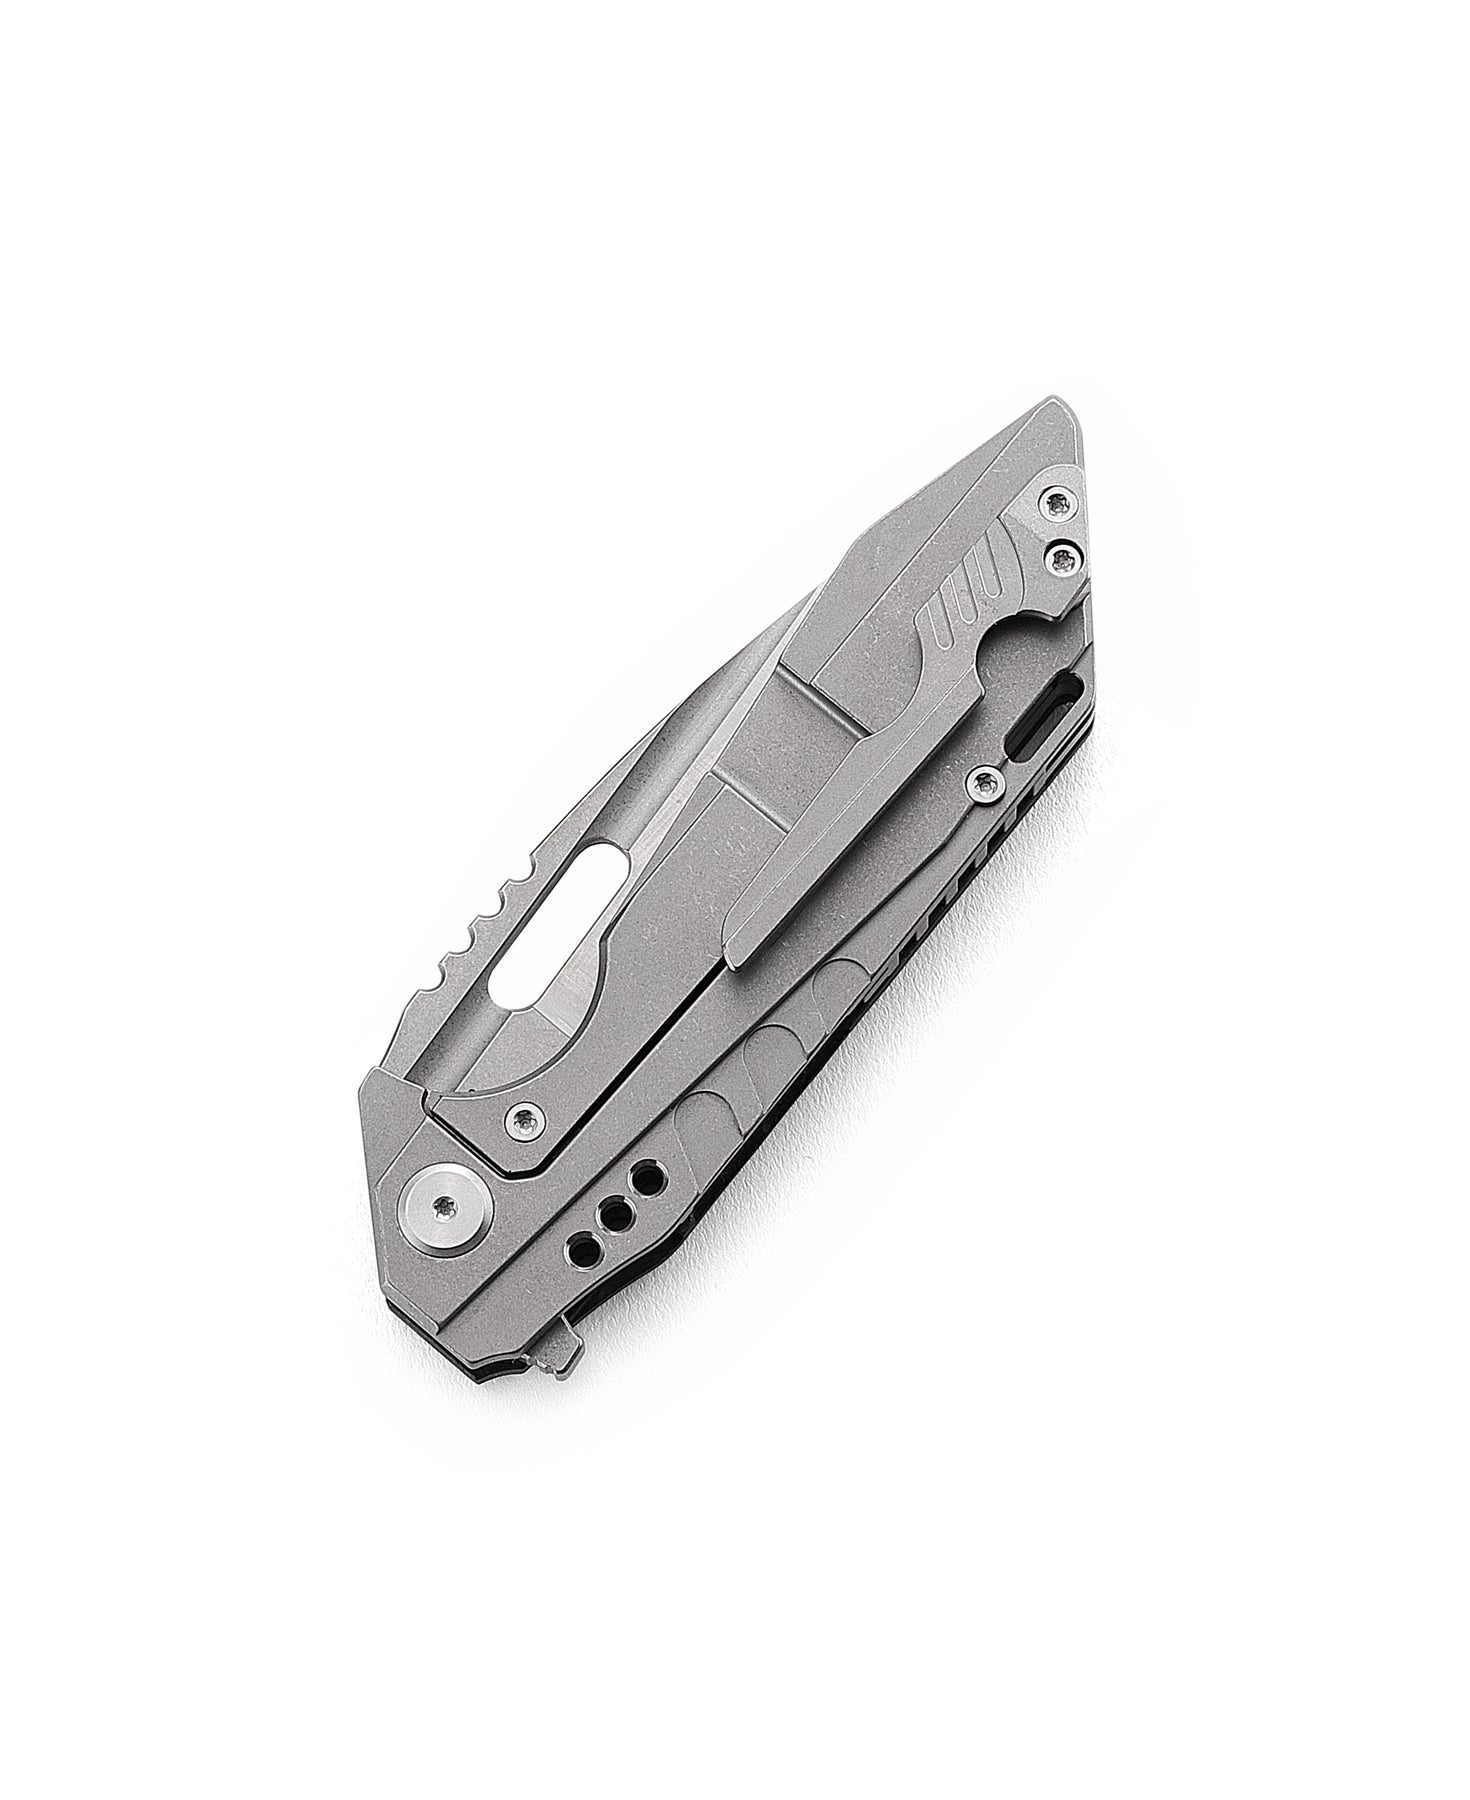 Bestech Knives SHODAN S35VN钢 钛合金柄 BT1910C 1860